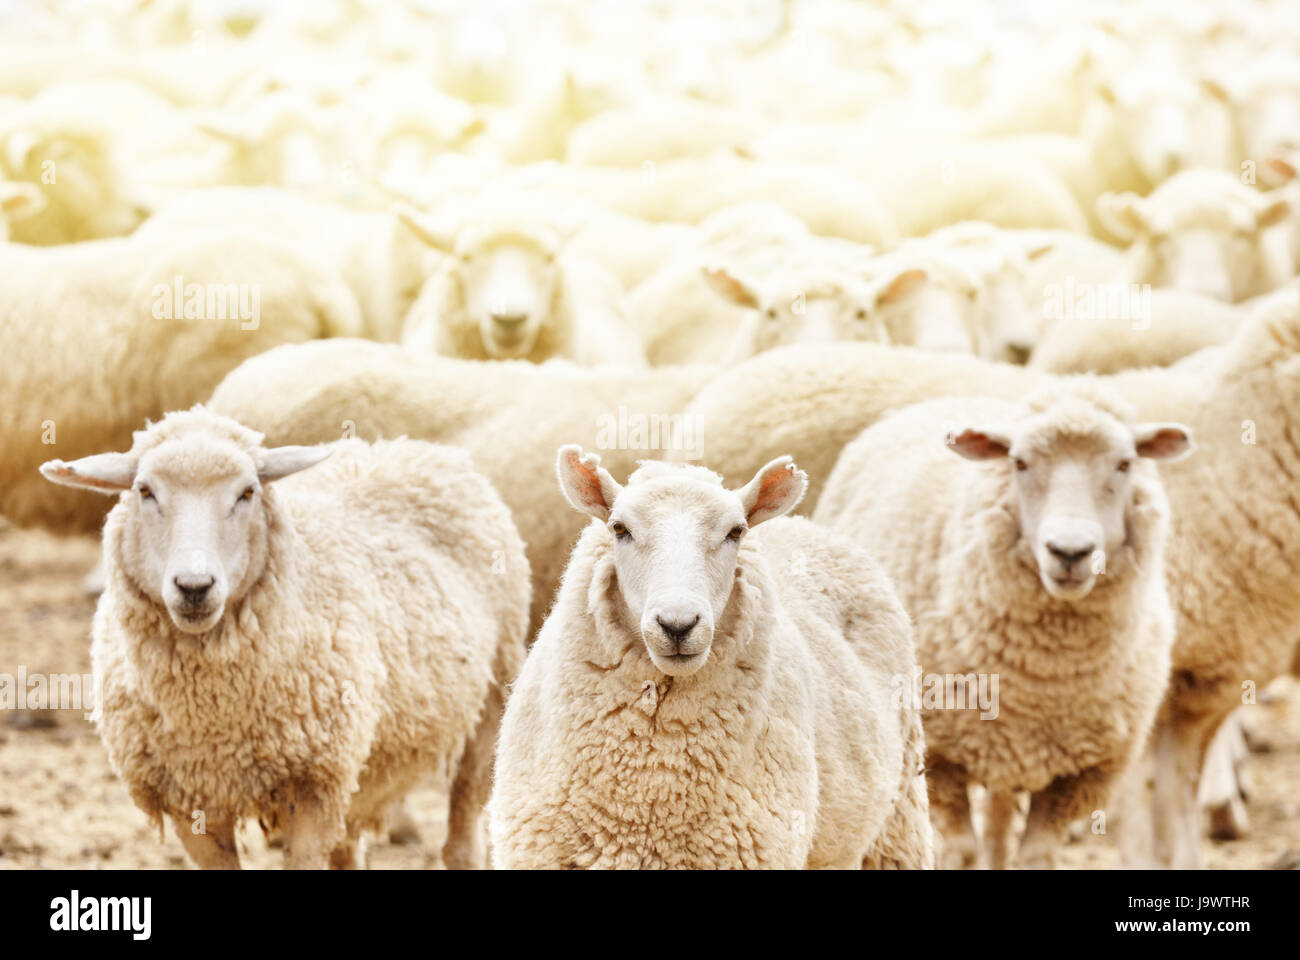 Livestock farm, flock of sheep Stock Photo